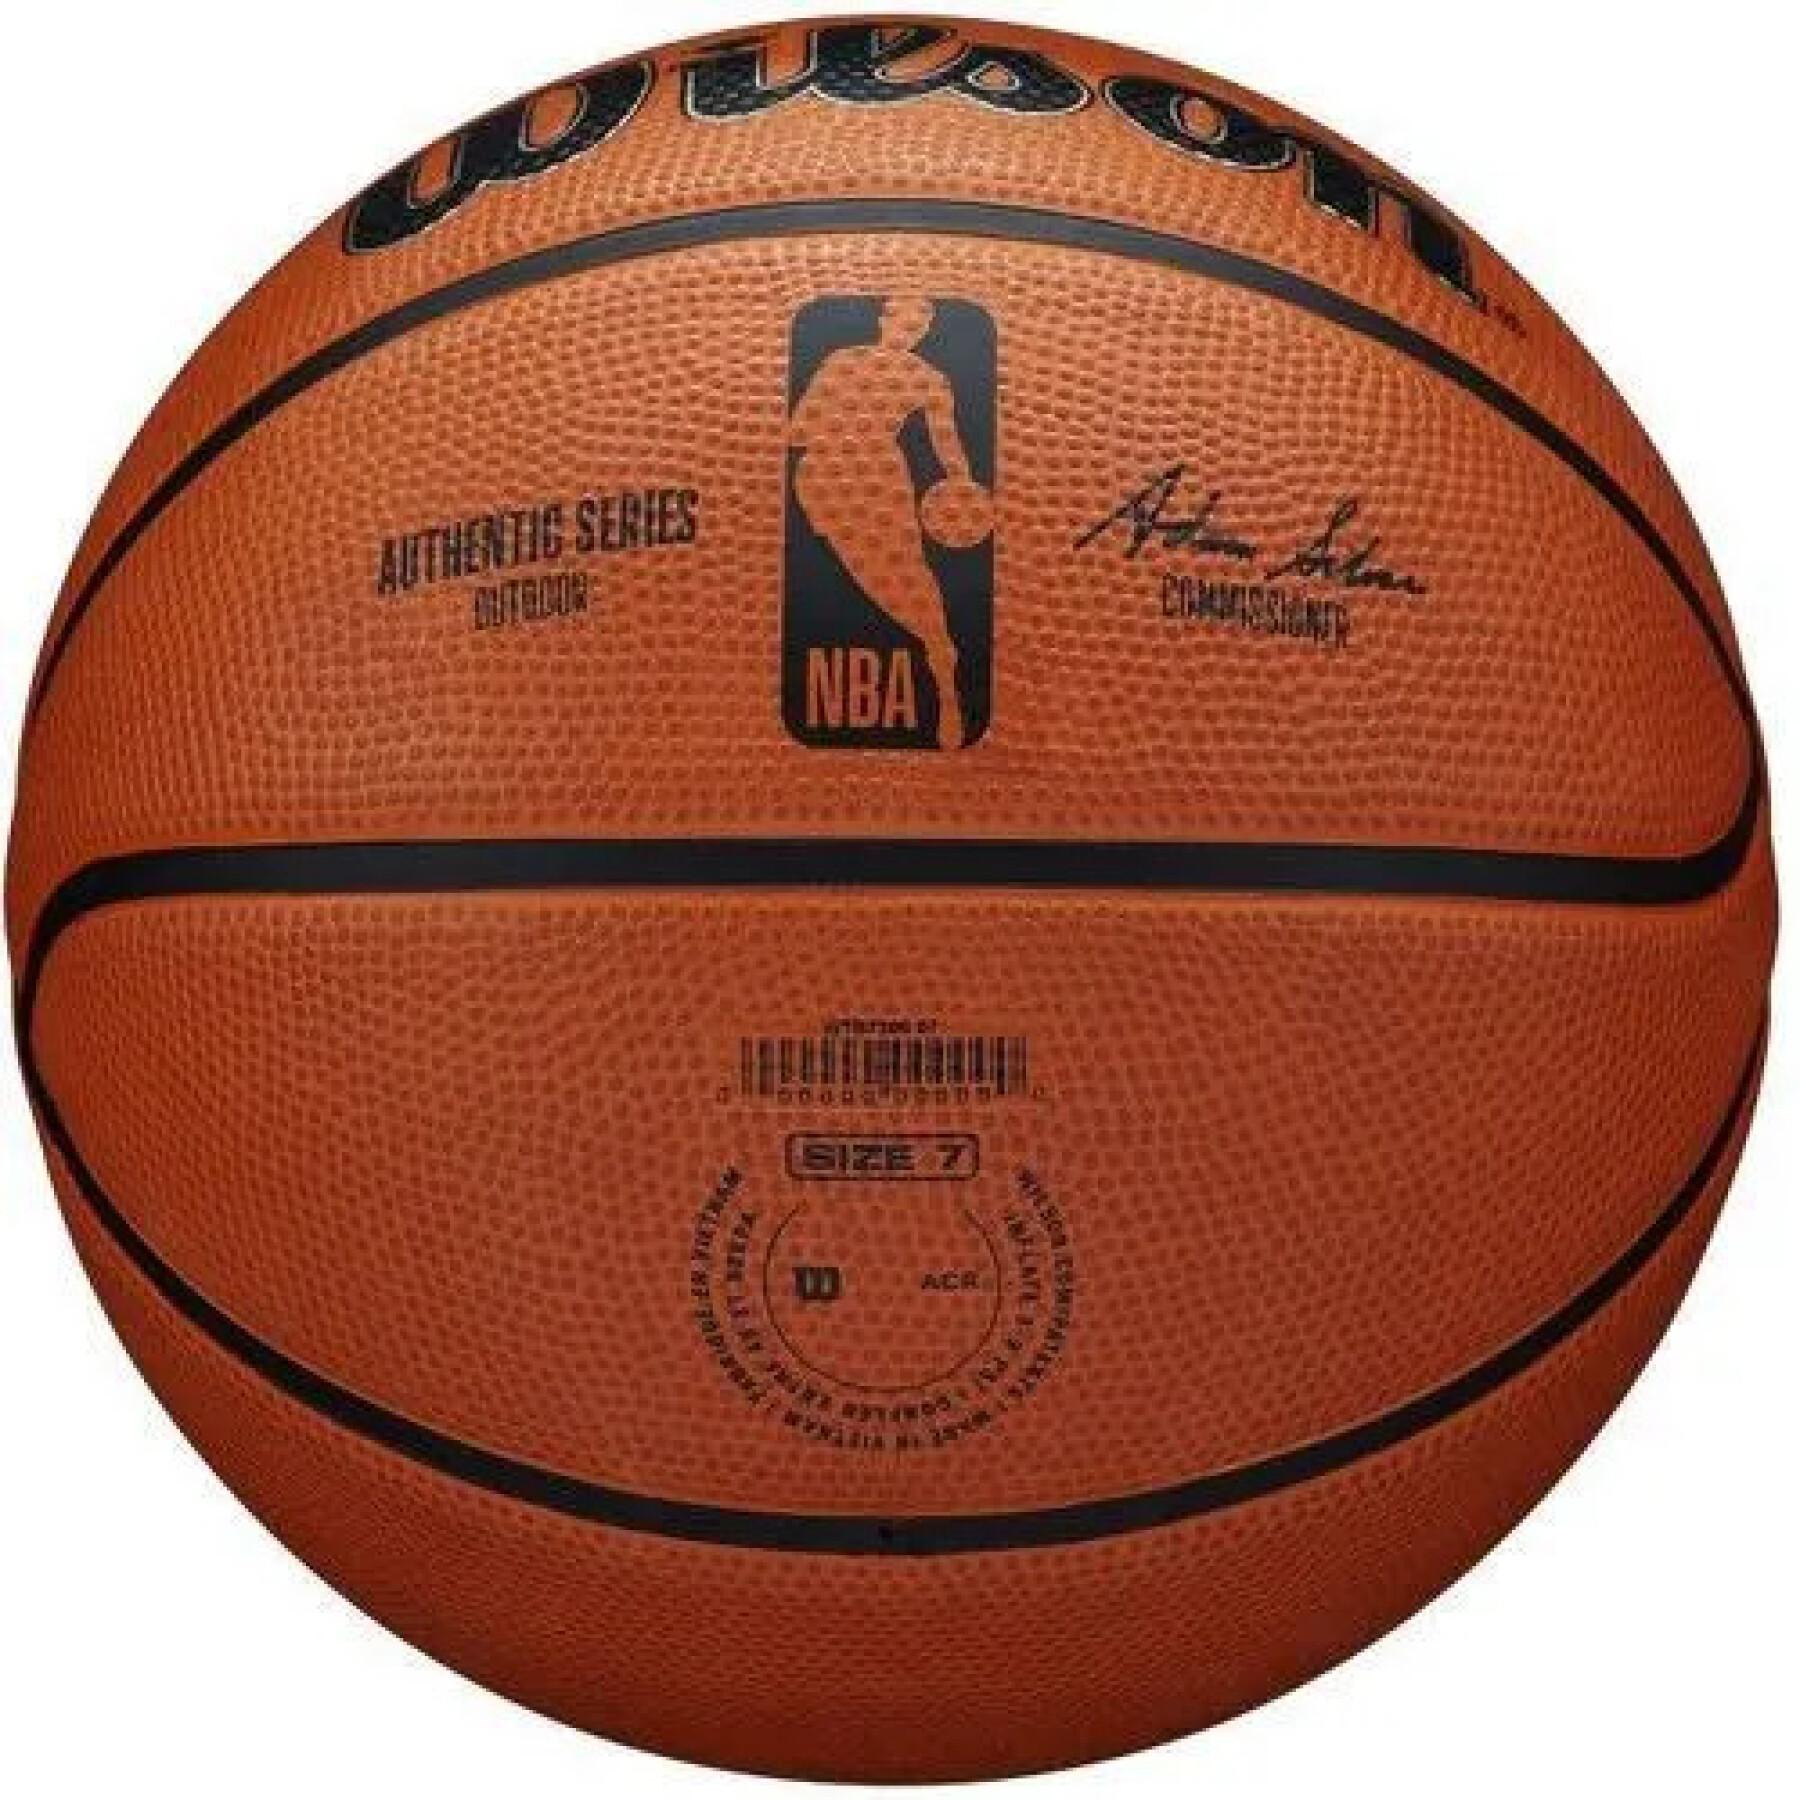 Wilson NBA Authentic series outdoor basketball